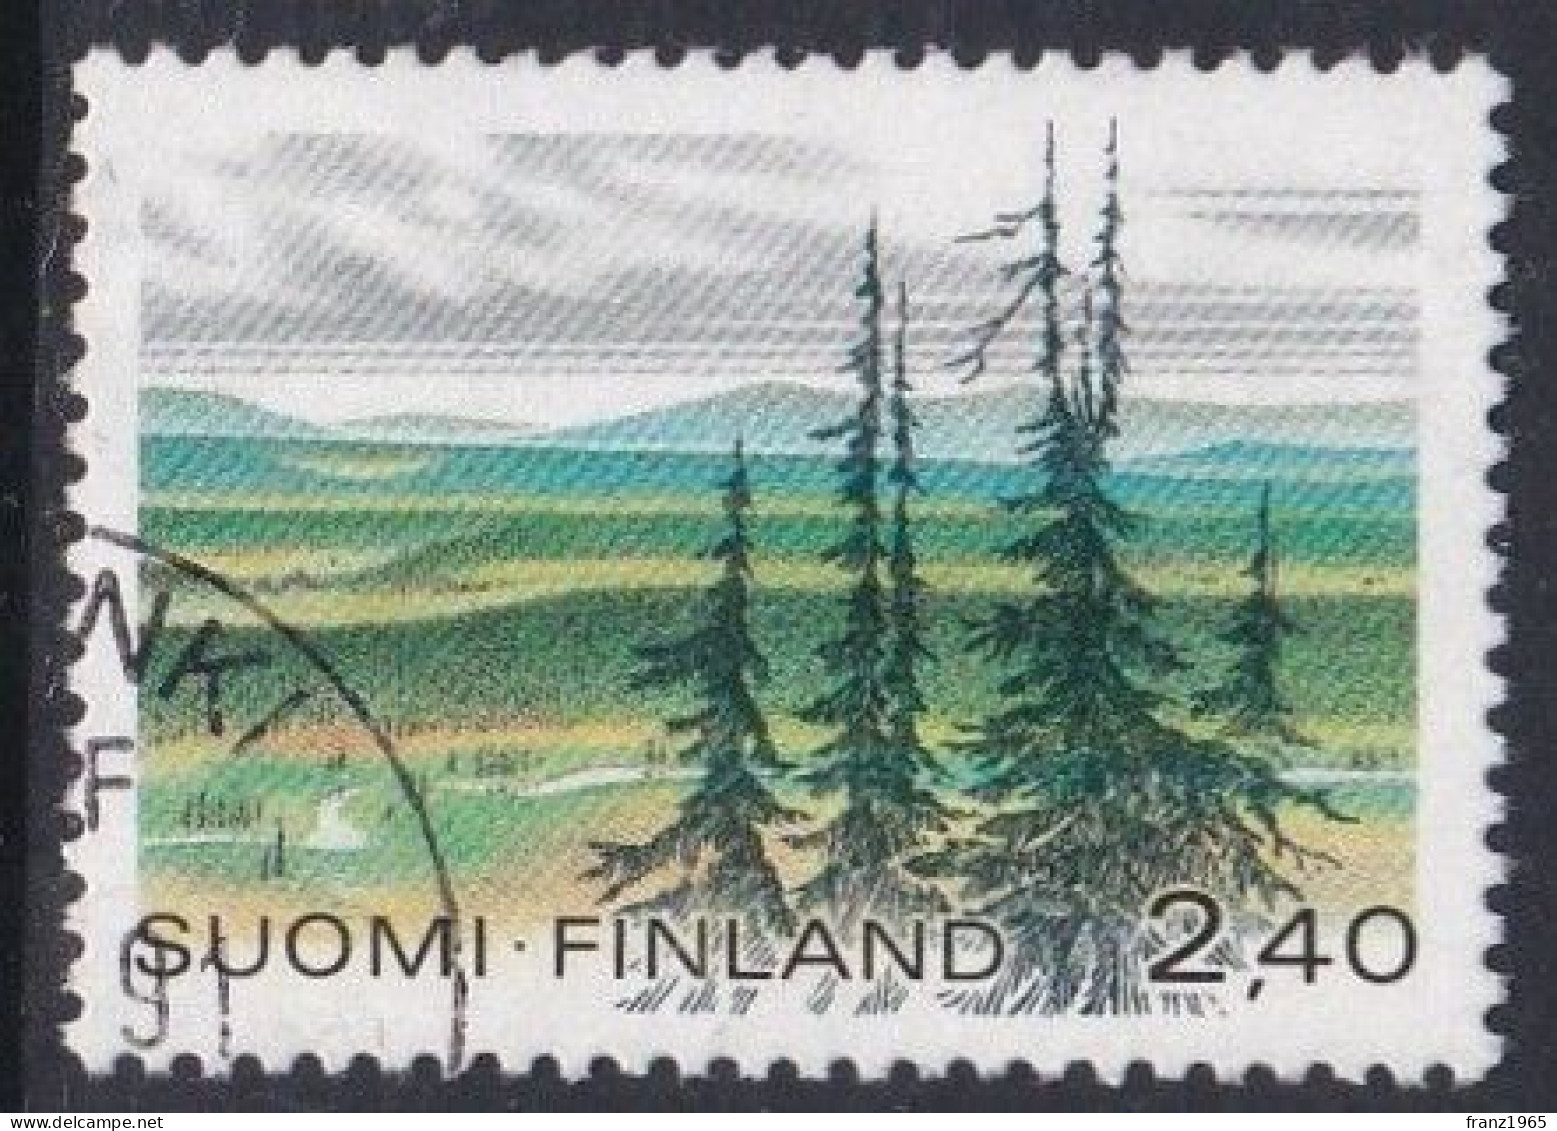 Urho-Kekkonen National Park With Saariselkä Mountains - Used Stamps